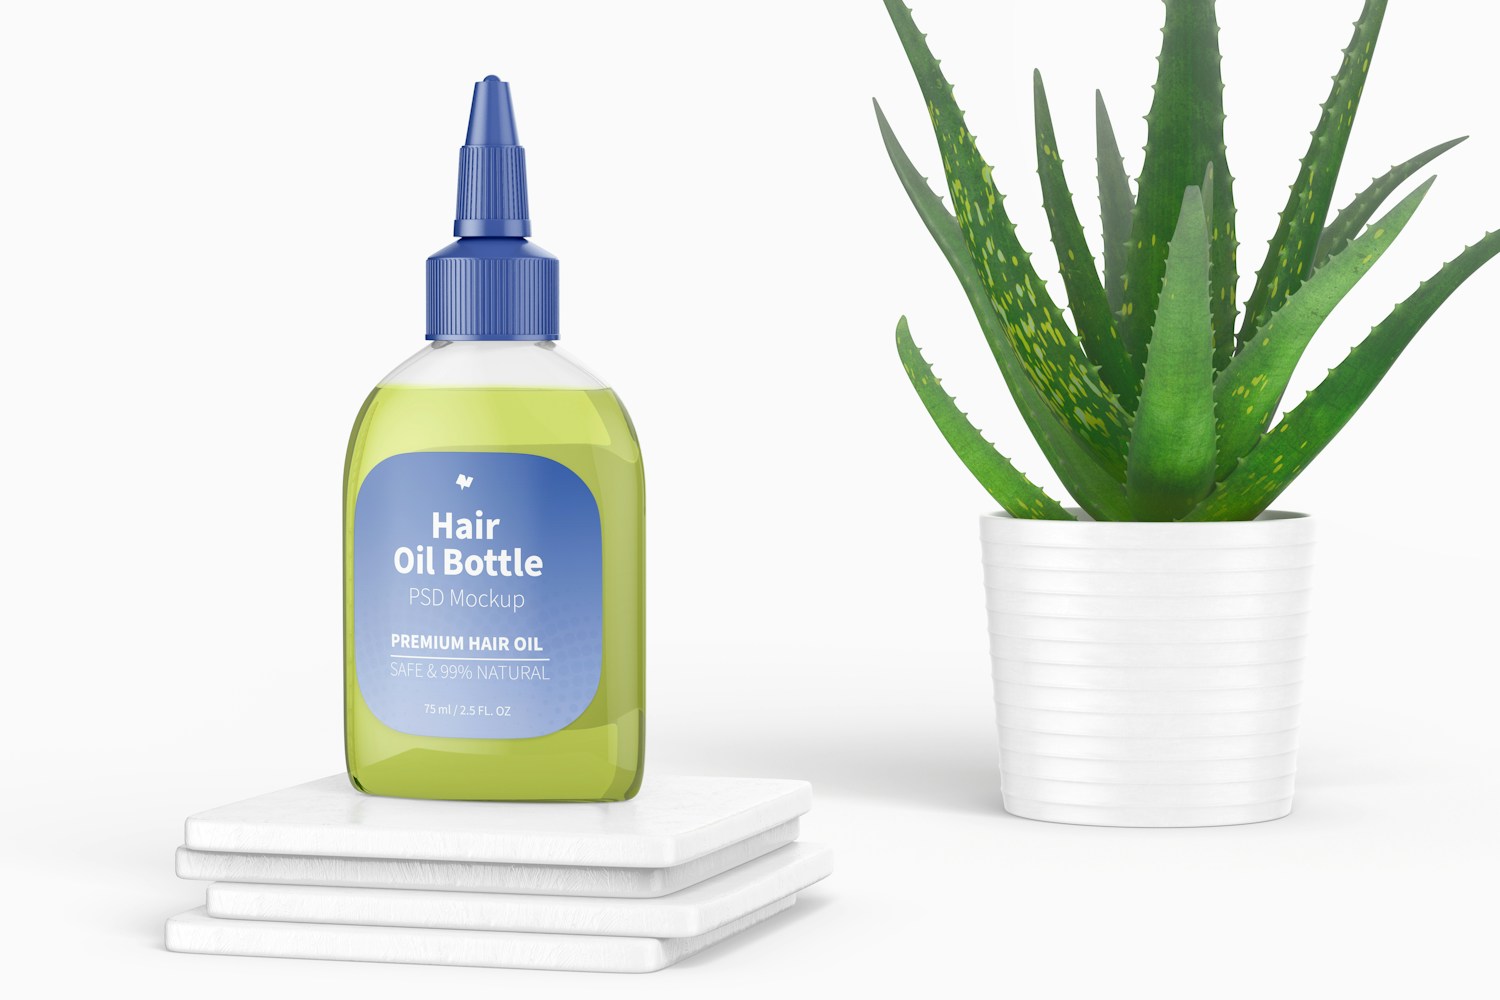 Hair Oil Bottle Mockup with Aloe Plant